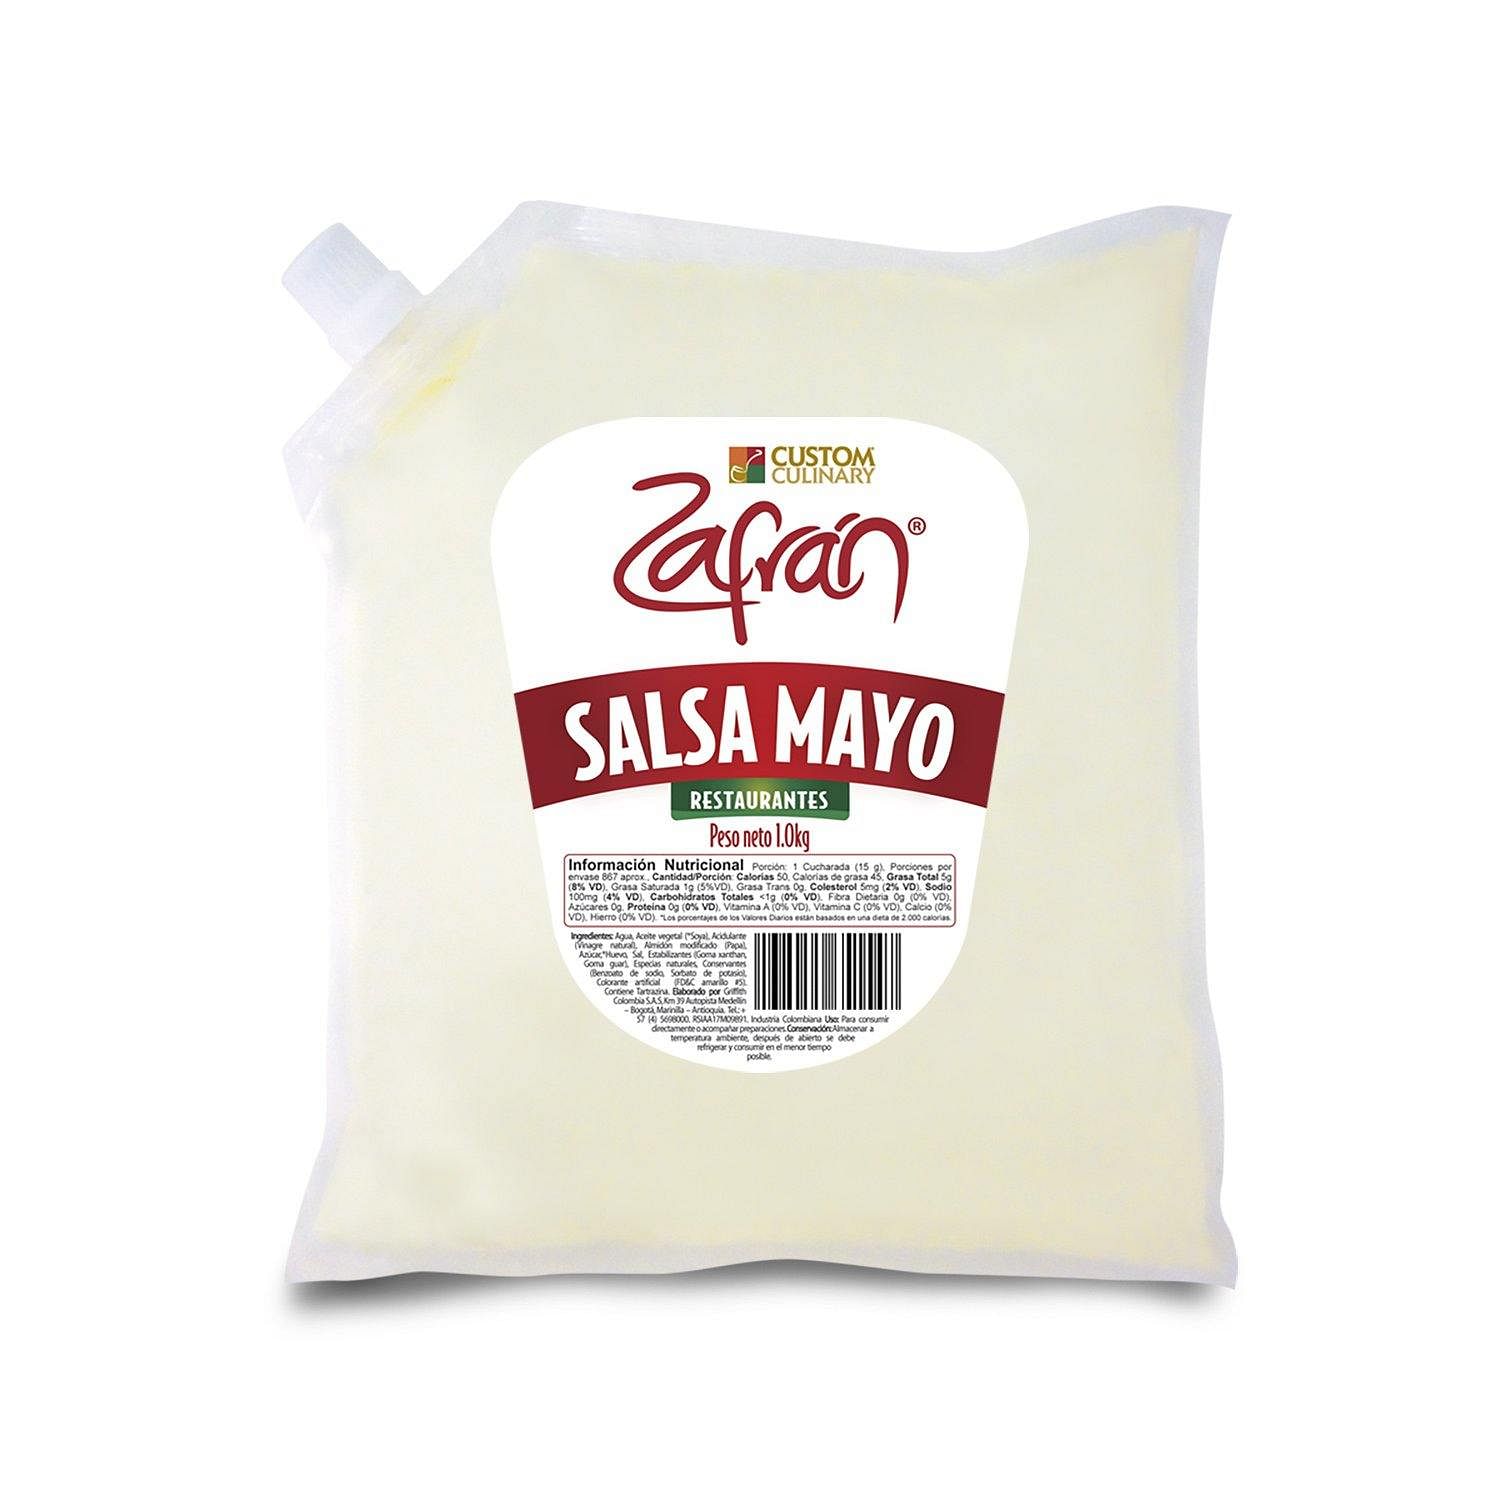 Salsa Mayo Restaurantes Zafrán® Bolsa Válvula 1kg - Custom Culinary